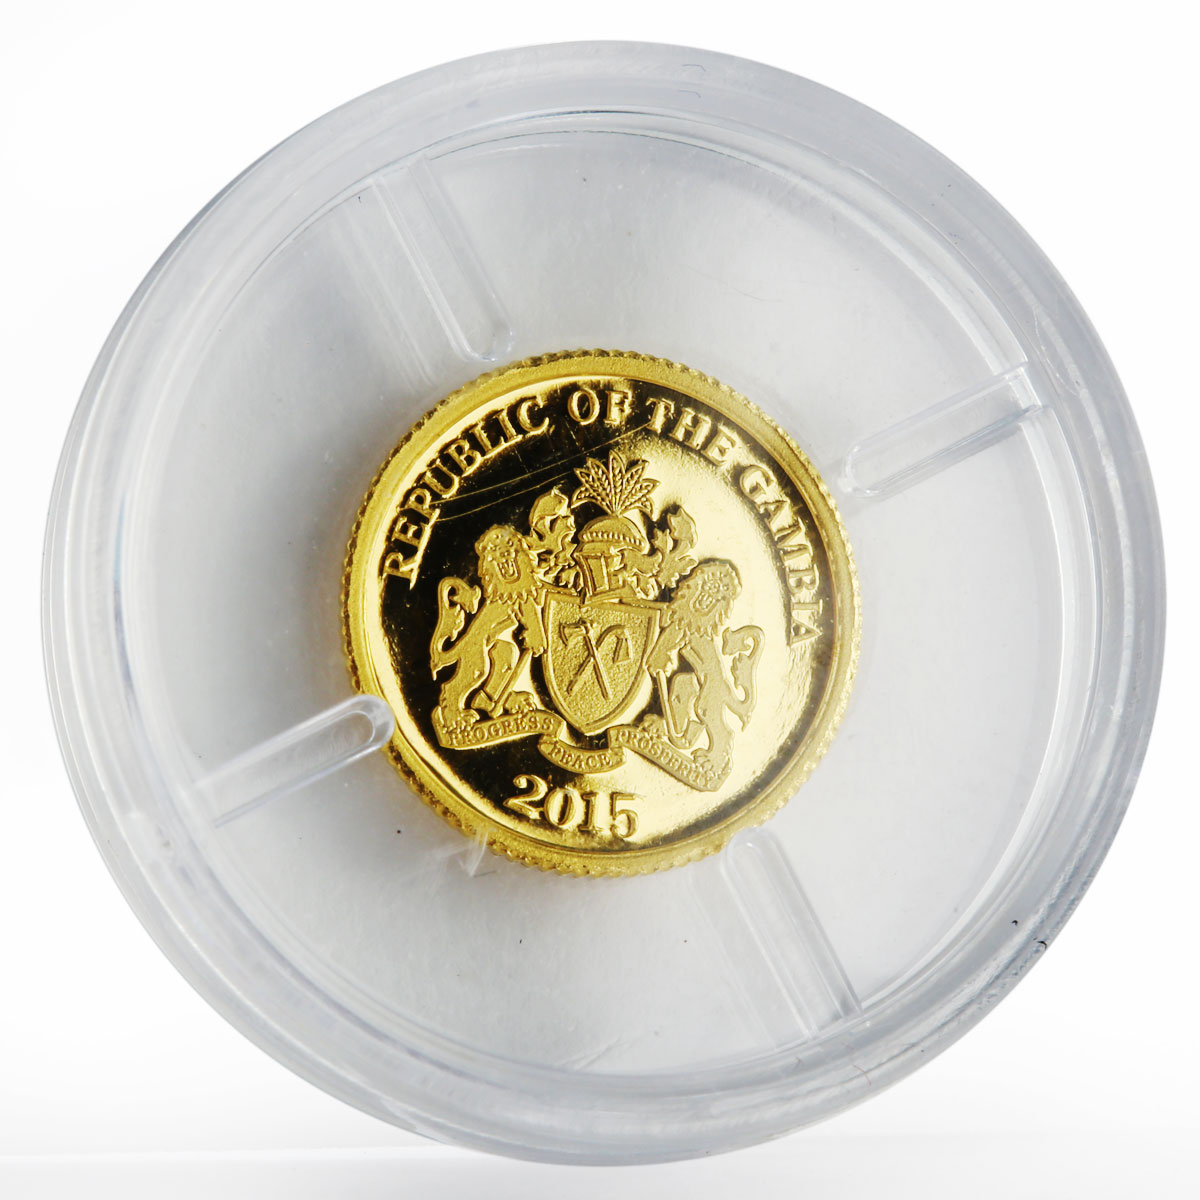 Gambia 200 dalasis Elvis Presley King of Rock singer proof gold coin 2015